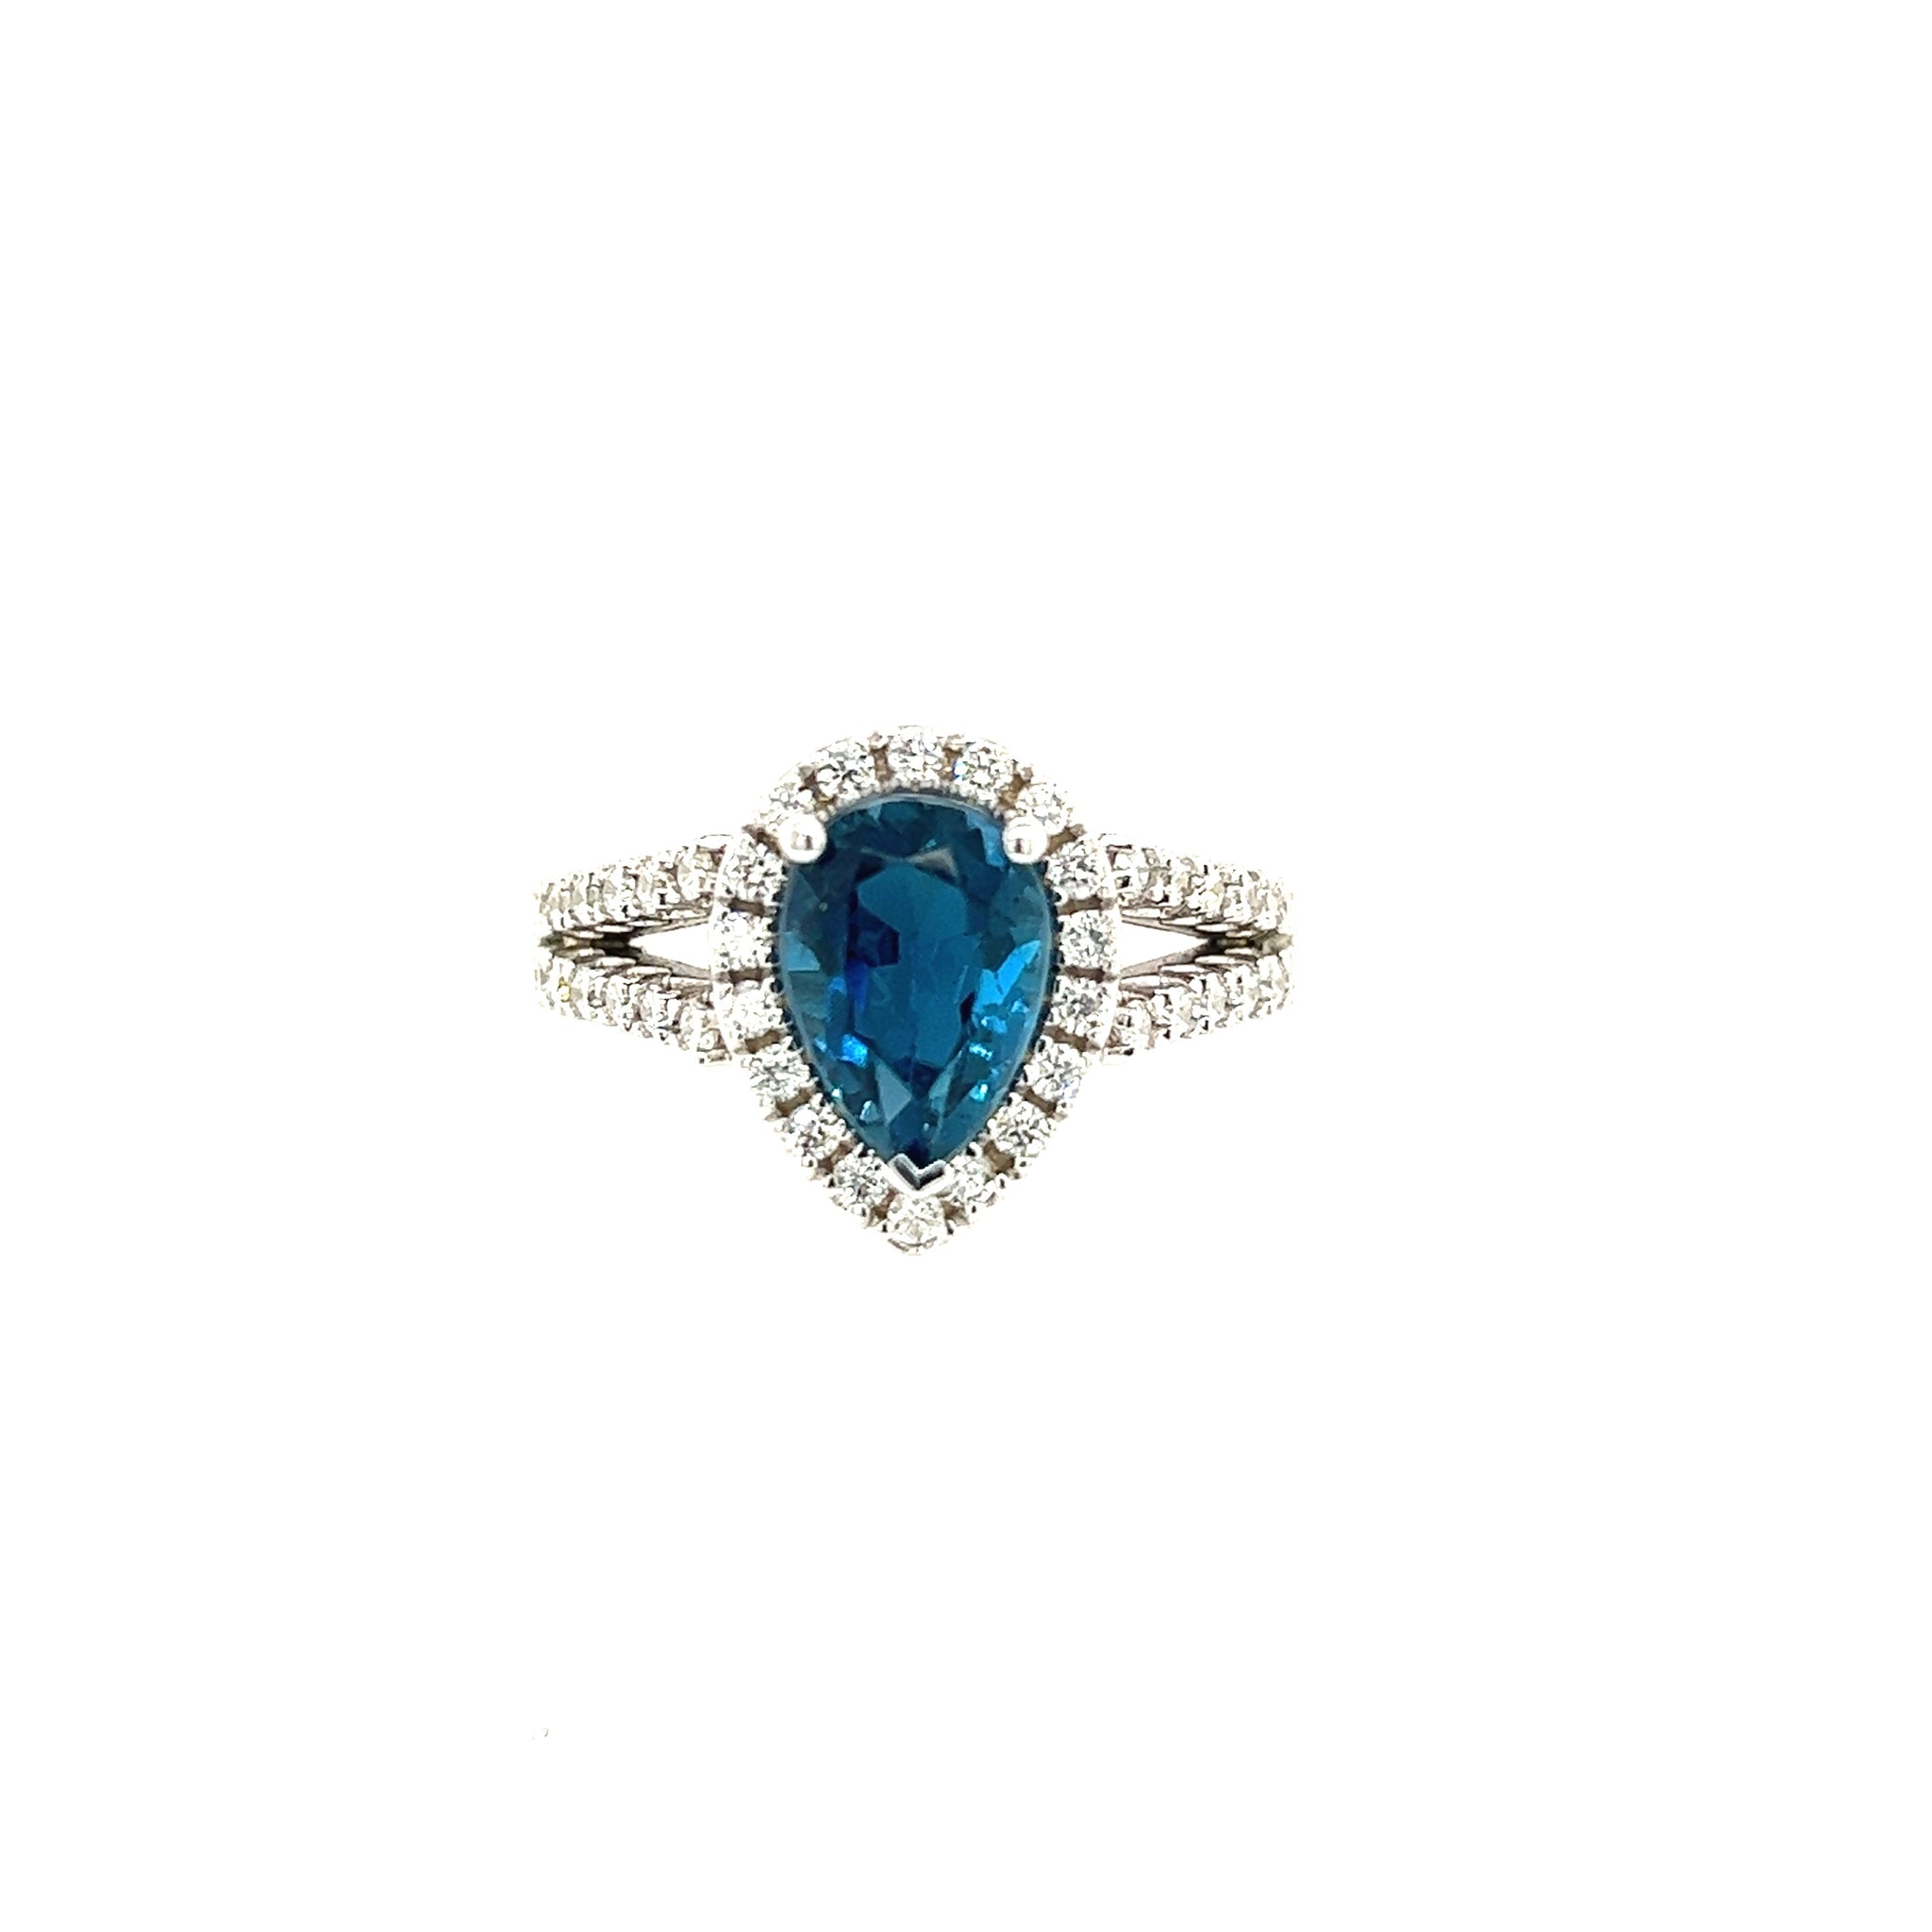 Natural Blue Topaz Diamond Ring Size 6.5 14k W Gold 3.77 TCW Certified $3,950 300213